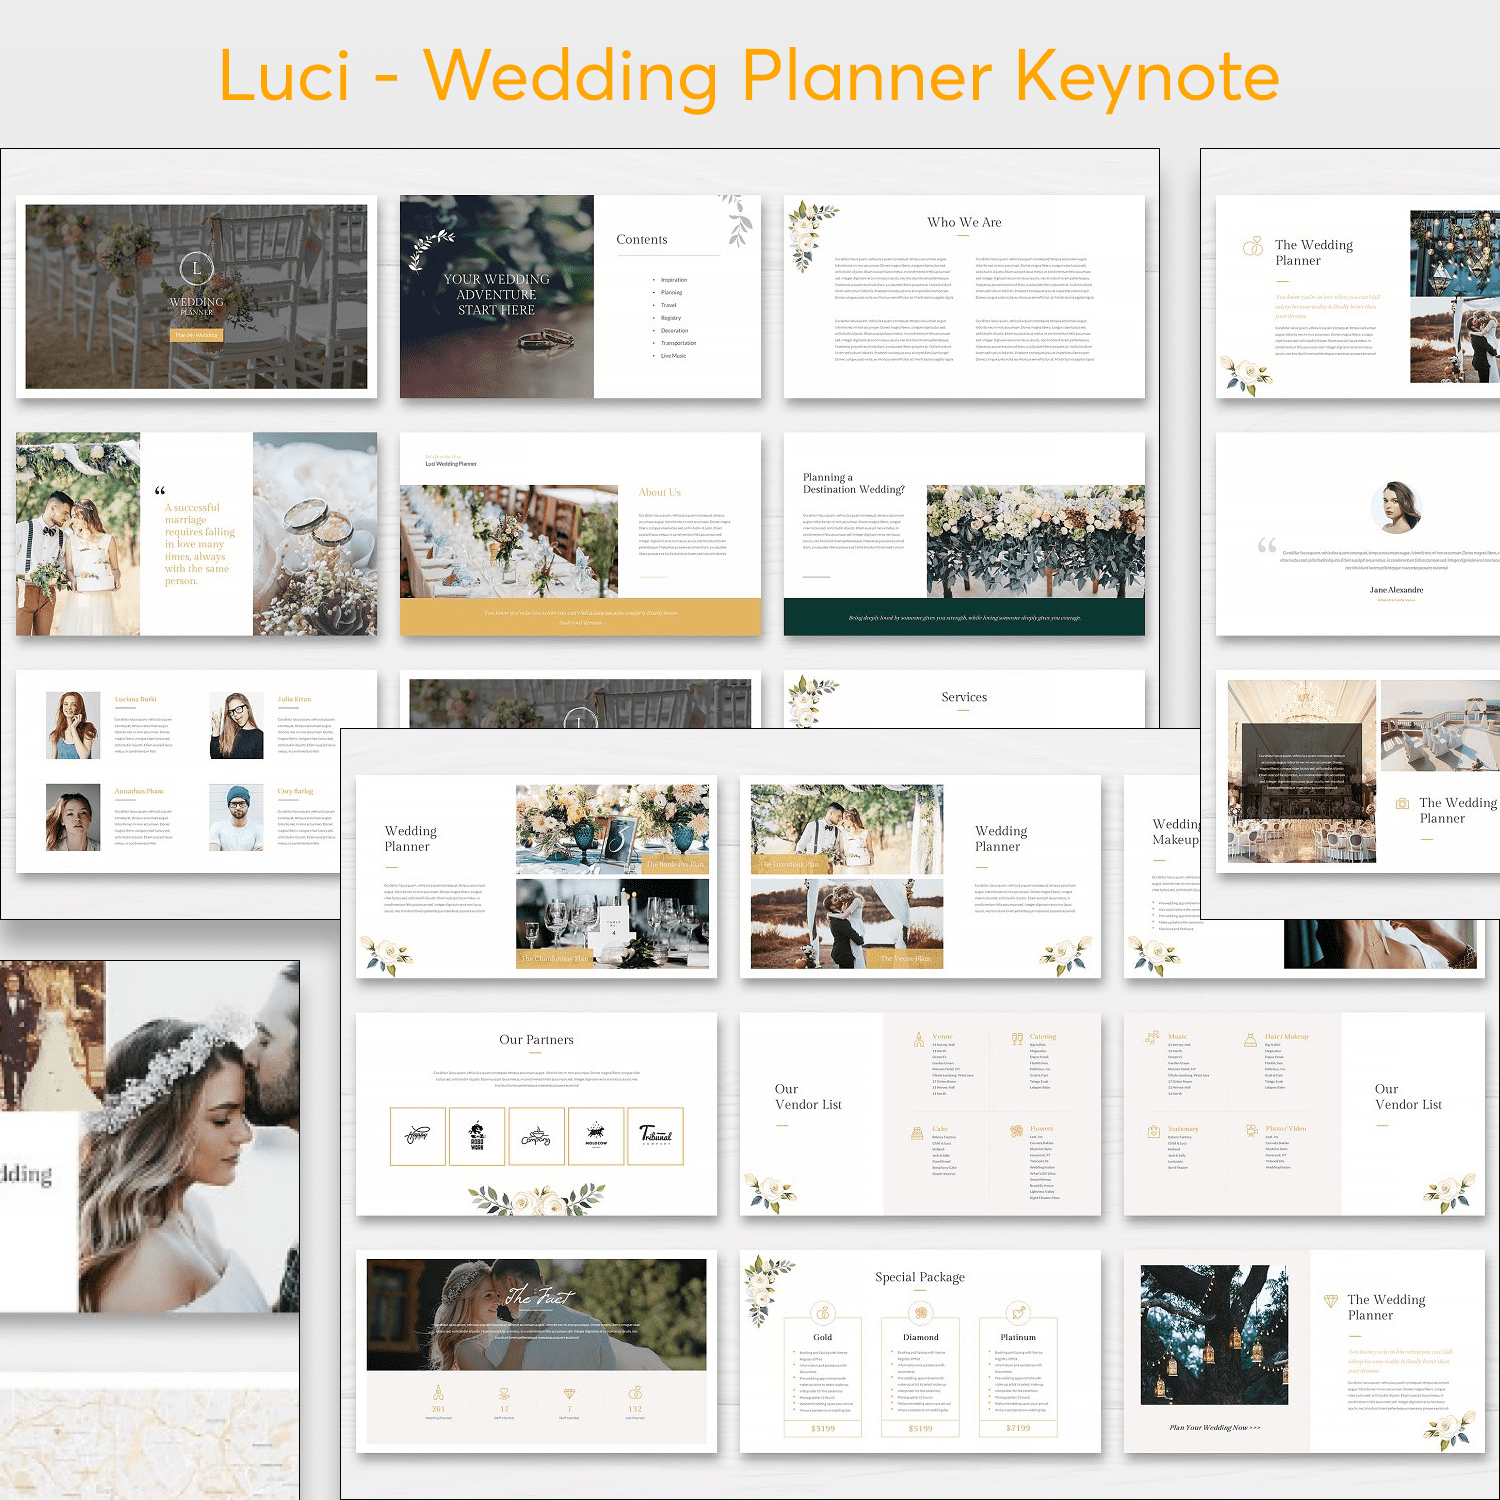 Luci - Wedding Planner Keynote cover.